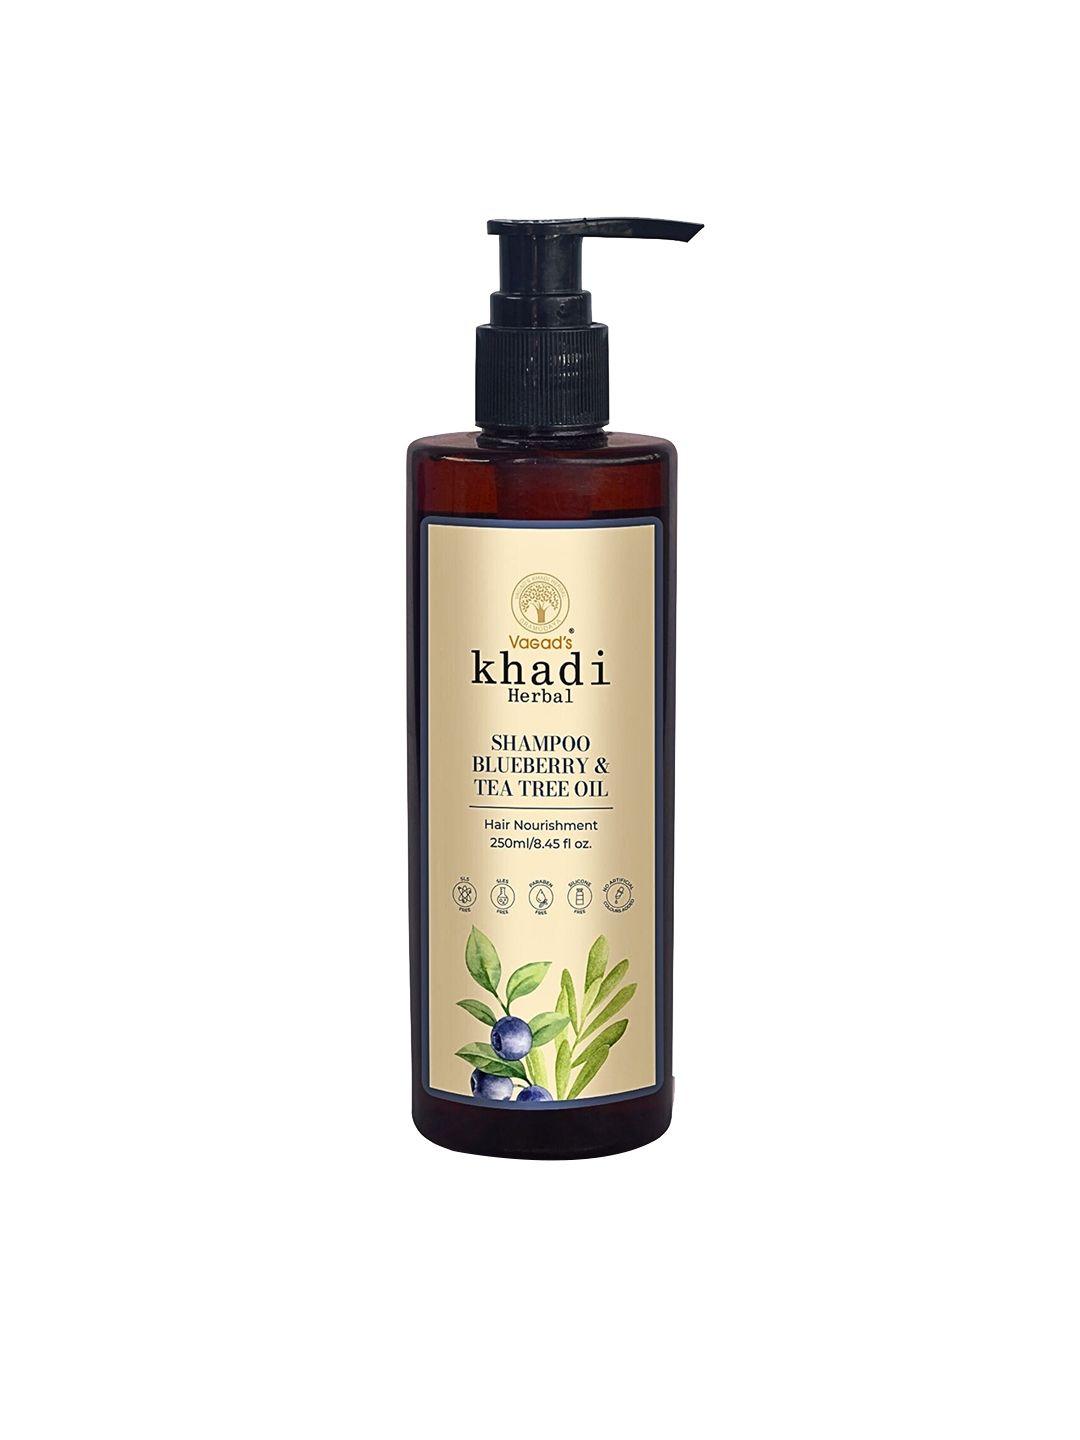 vagads-khadi-herbal-blueberry-with-tea-tree-oil-shampoo---250ml